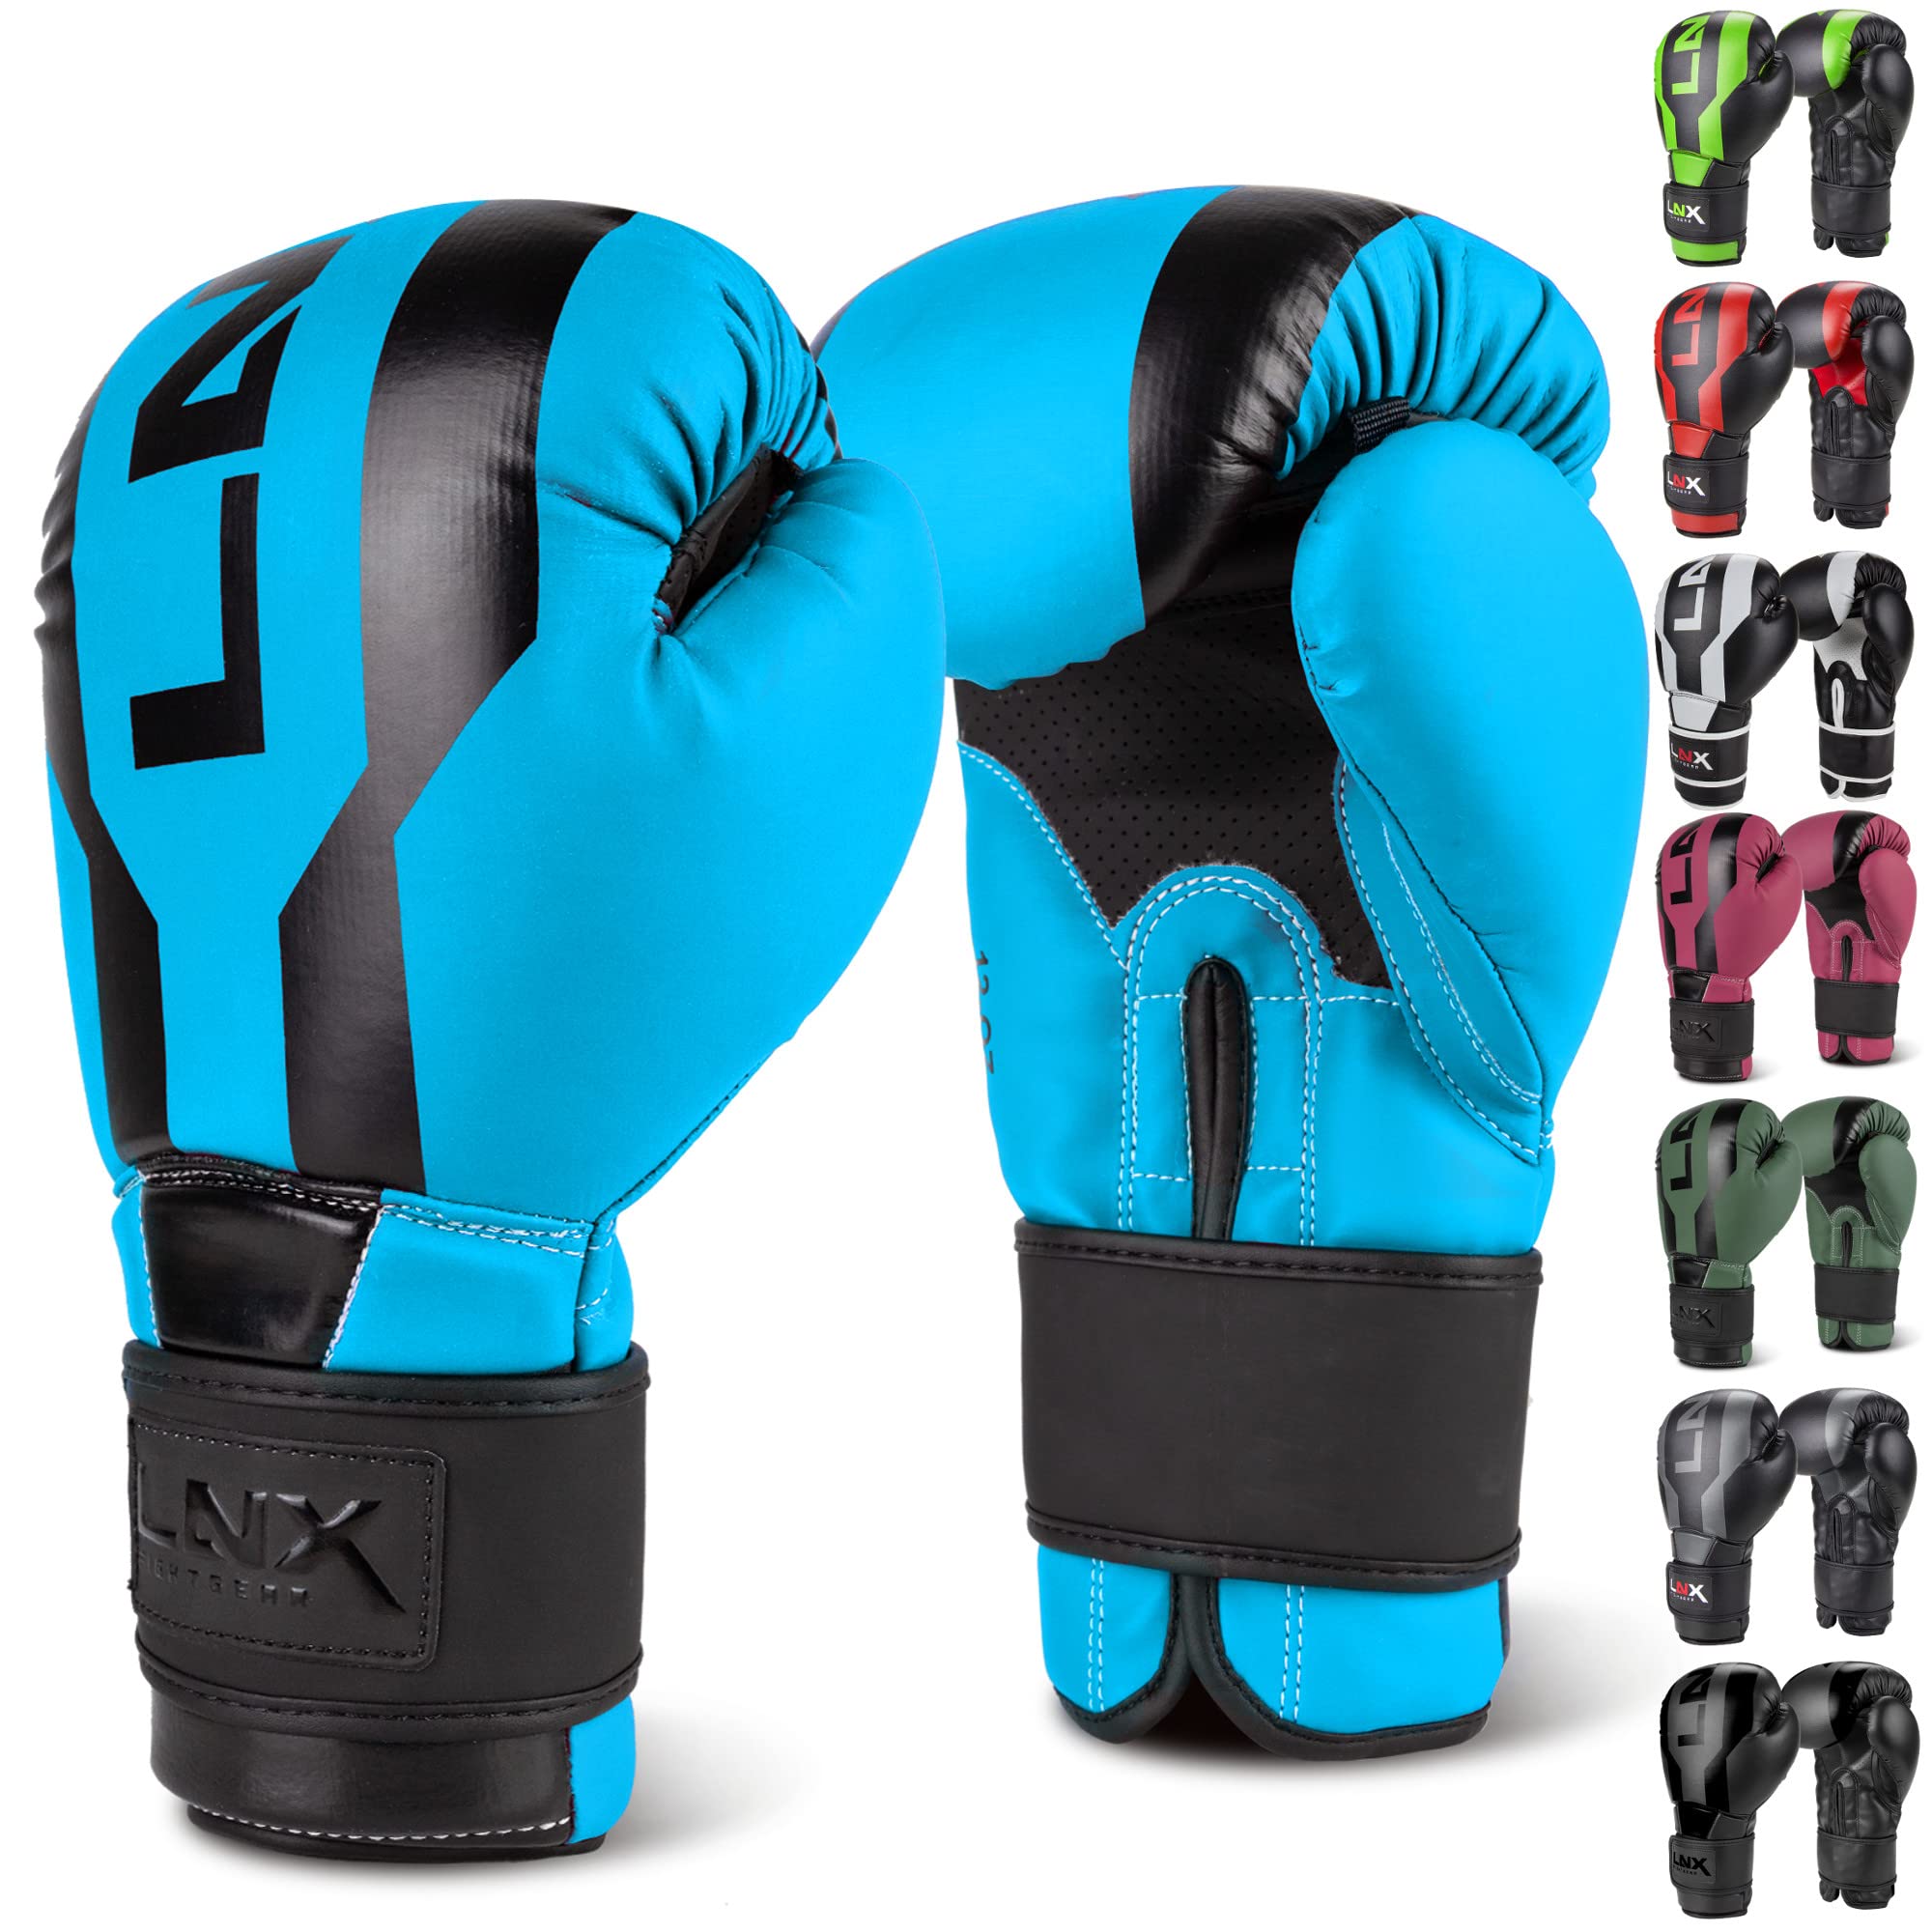 LNX Boxhandschuhe Stealth - Männer Frauen 8 10 12 14 16 Oz - ideal für Kickboxen Boxen Muay Thai MMA Kampfsport Sparring Training UVM (Ultimatte Aqua (403), 10 Oz)